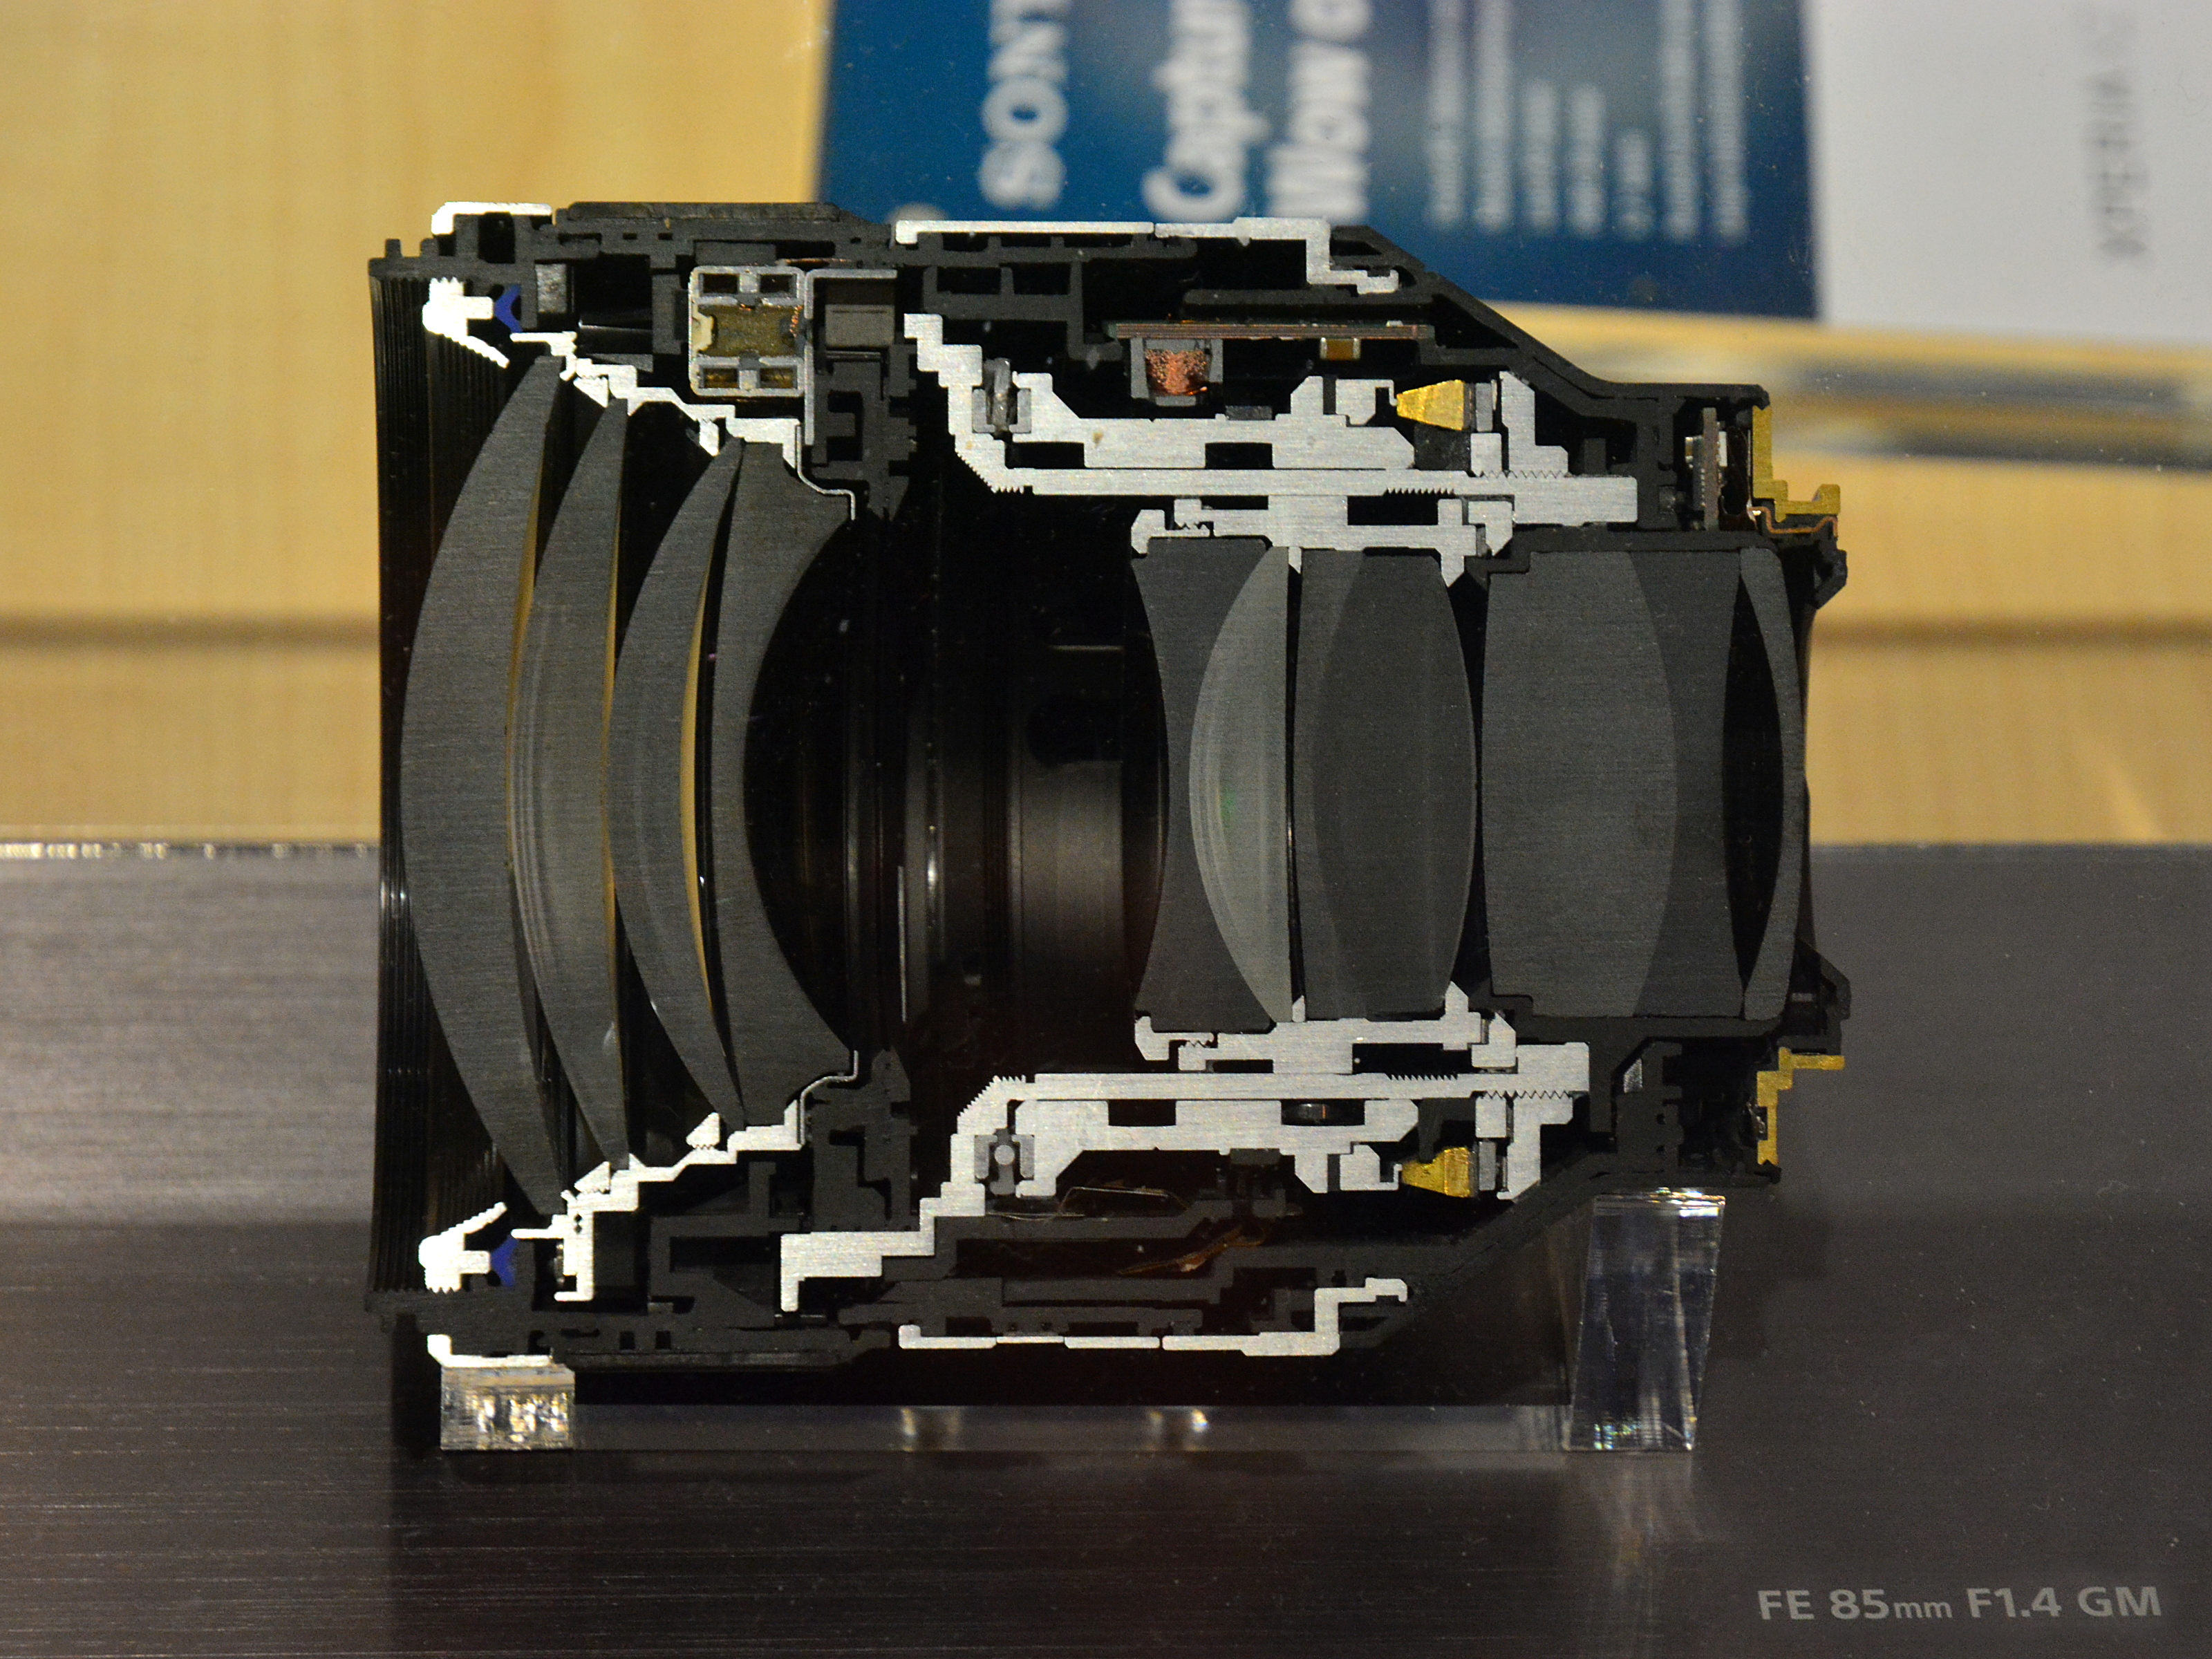 Sony FE 85mm F1.4 GM - Wikipedia